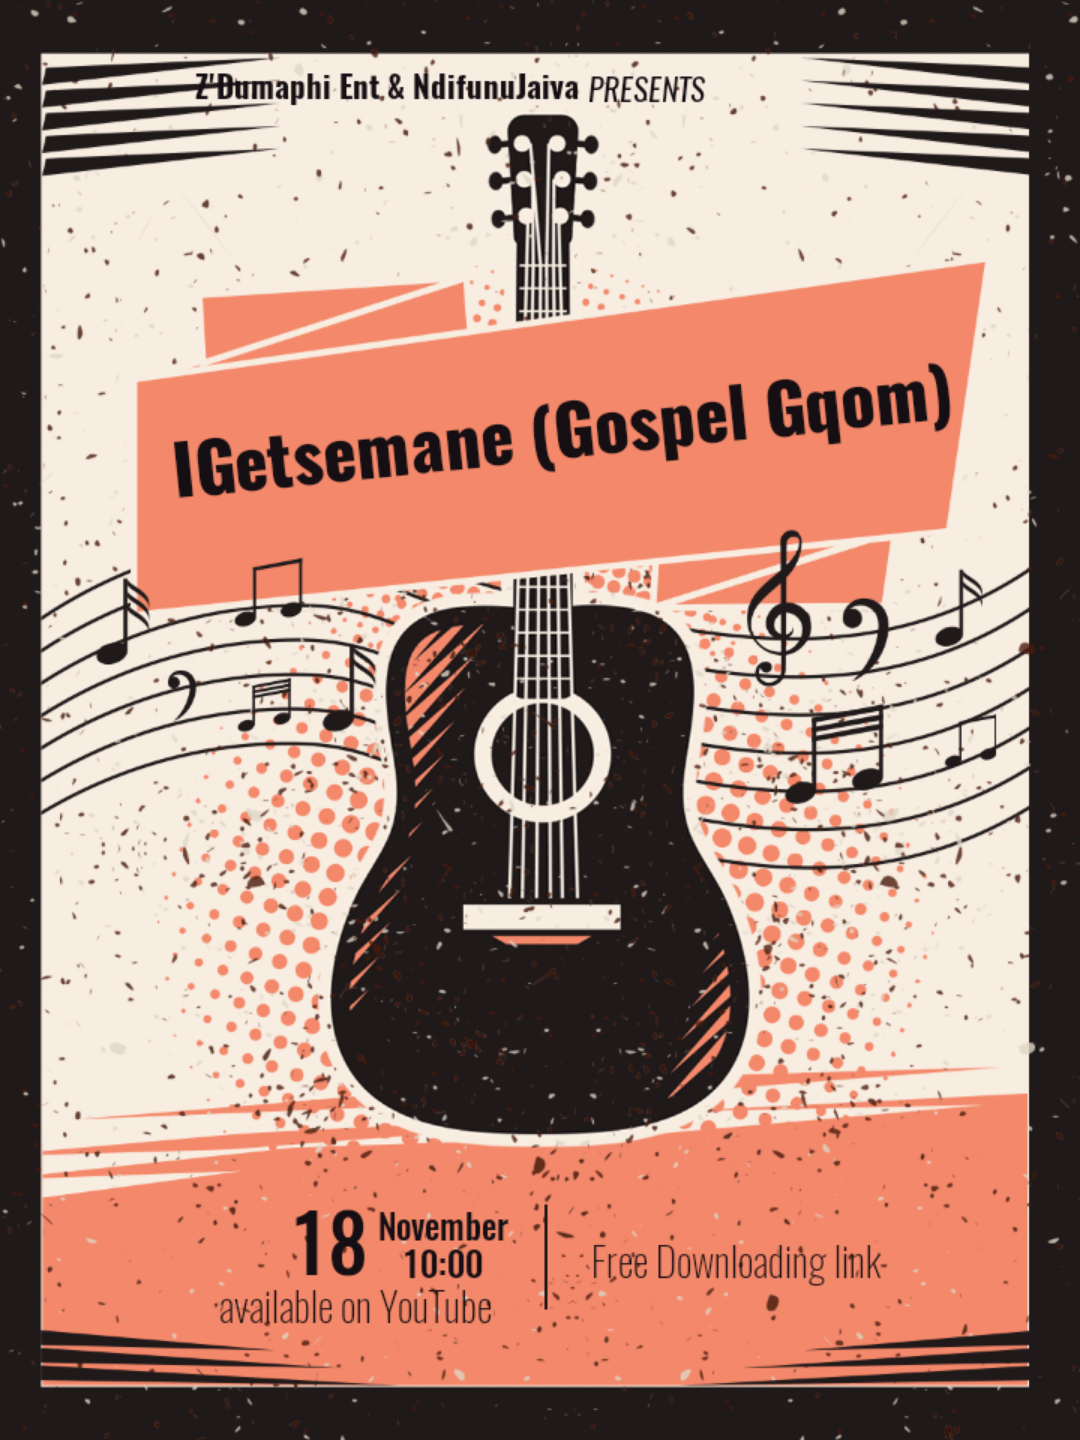 IGetsemane (Gospel Gqom) - Dj Sba CPT